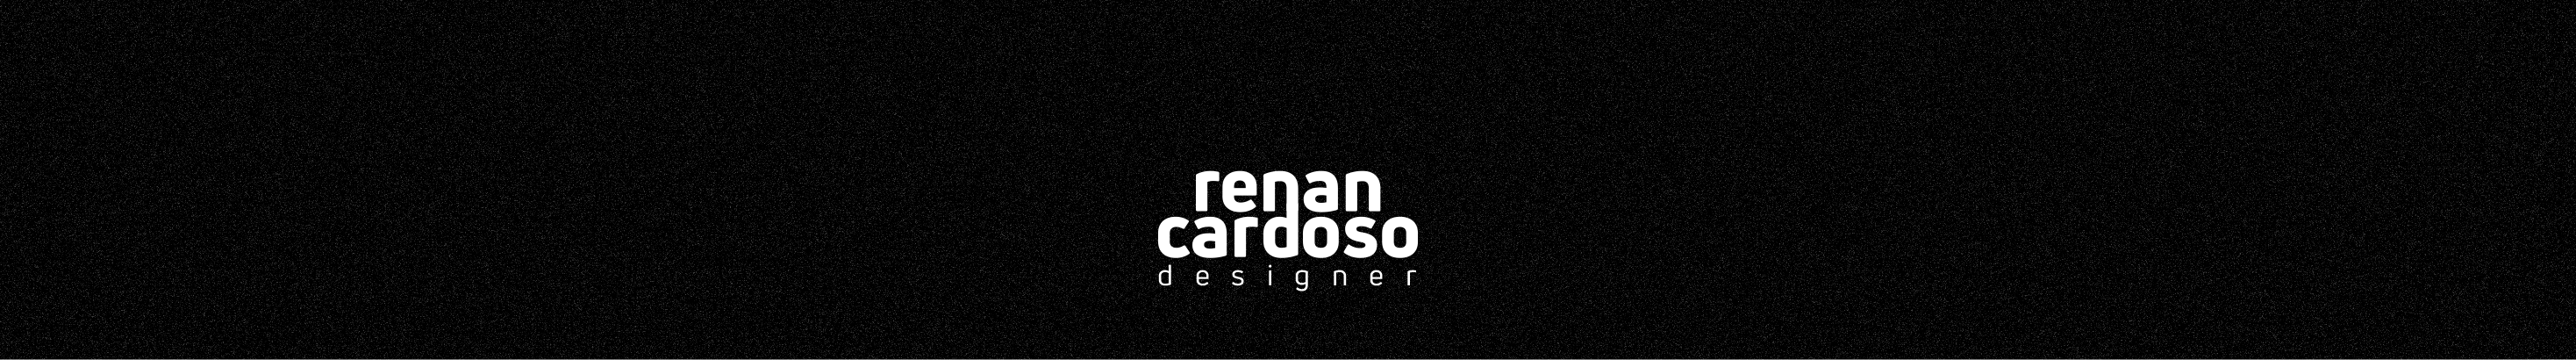 Renan Cardoso's profile banner